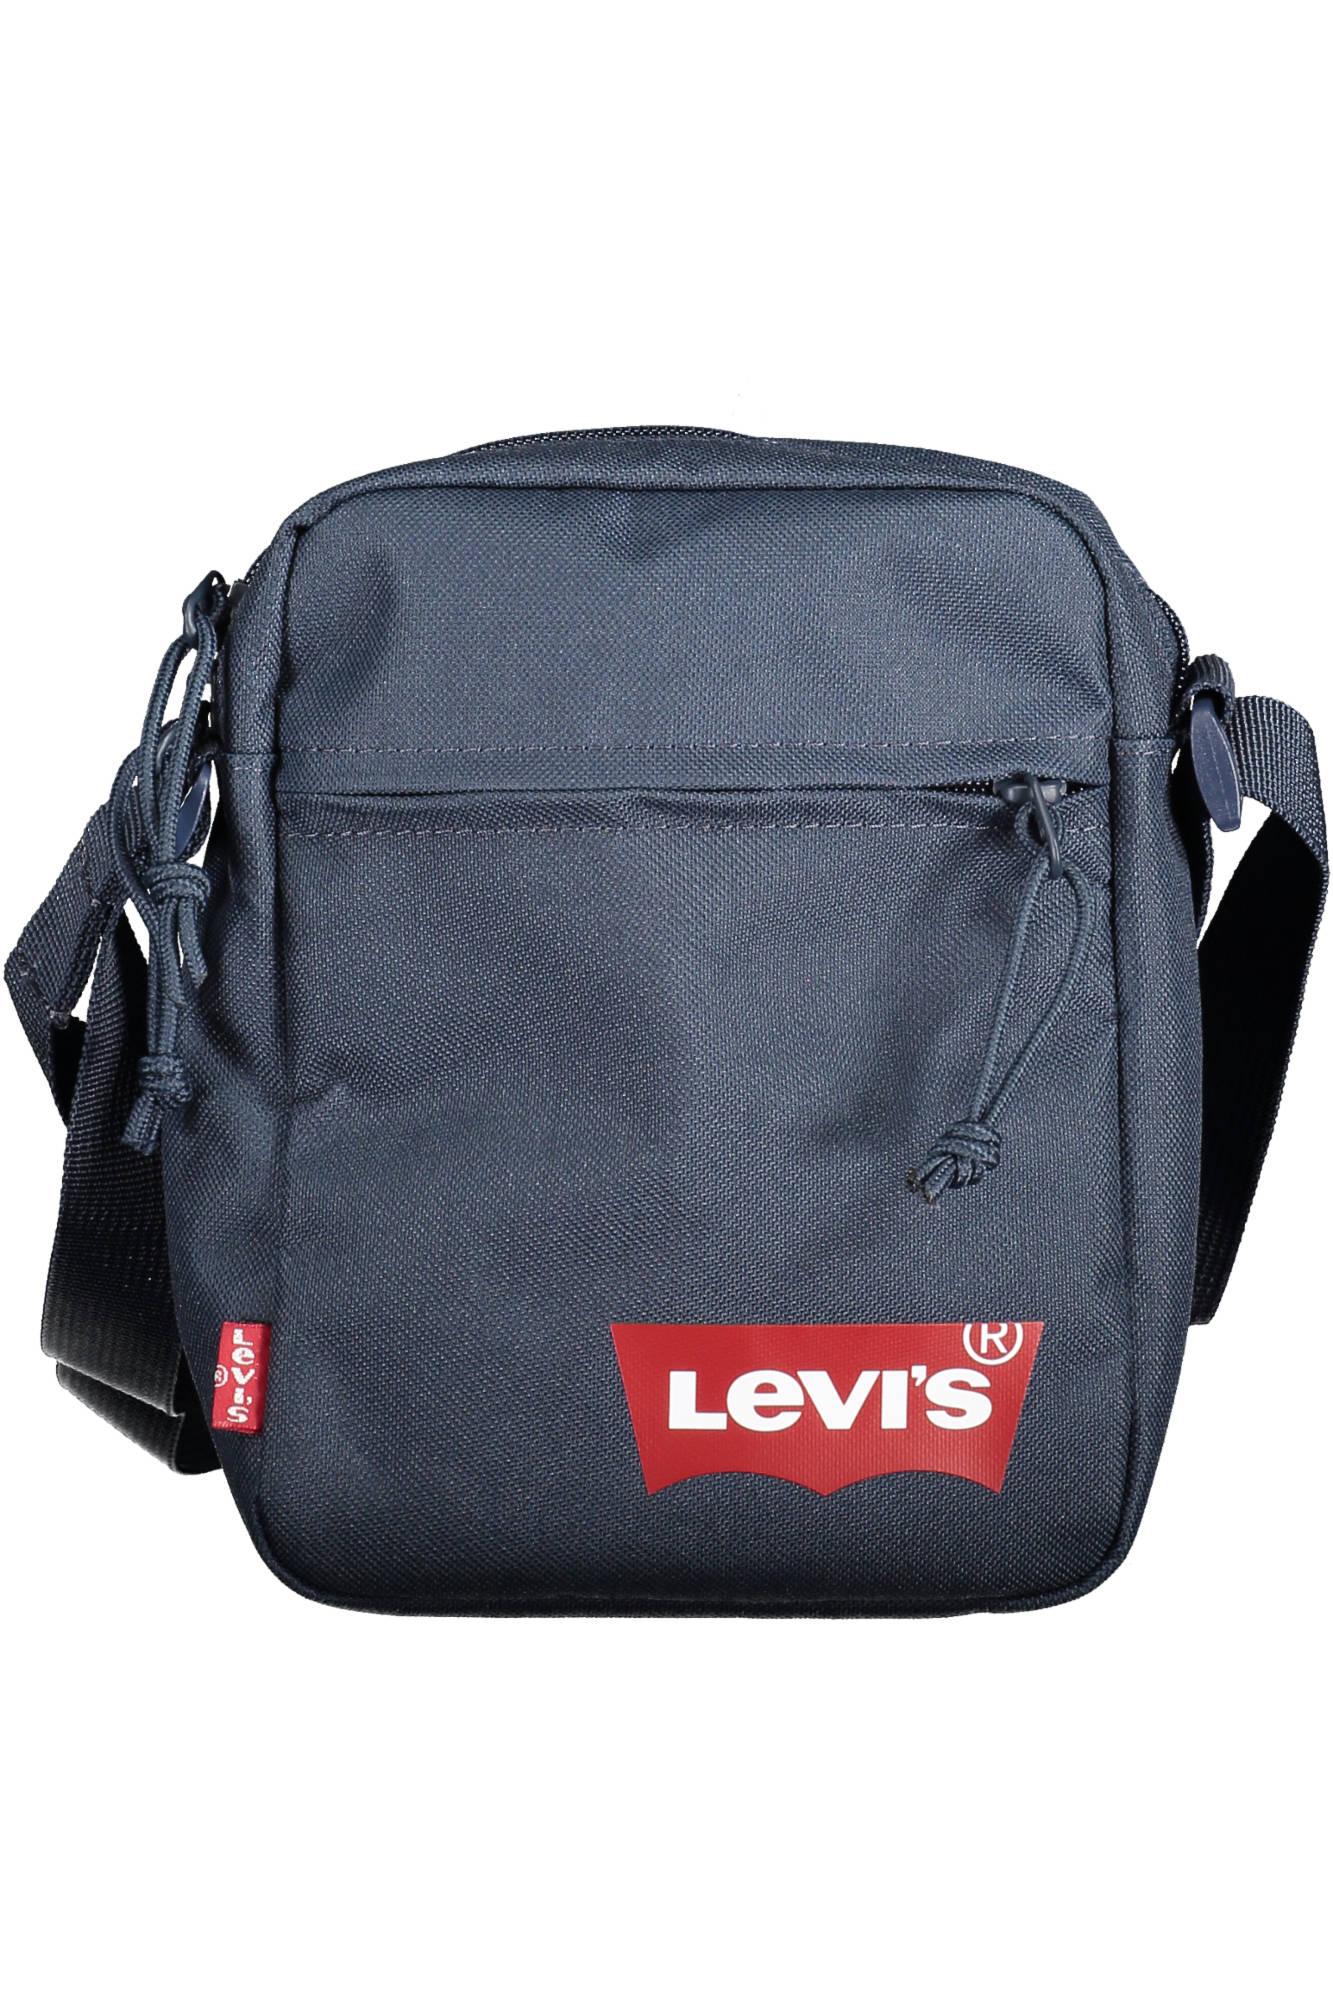 Levi's® WOMENS UTILITY TOTE - Tote bag - regular black/black - Zalando.de